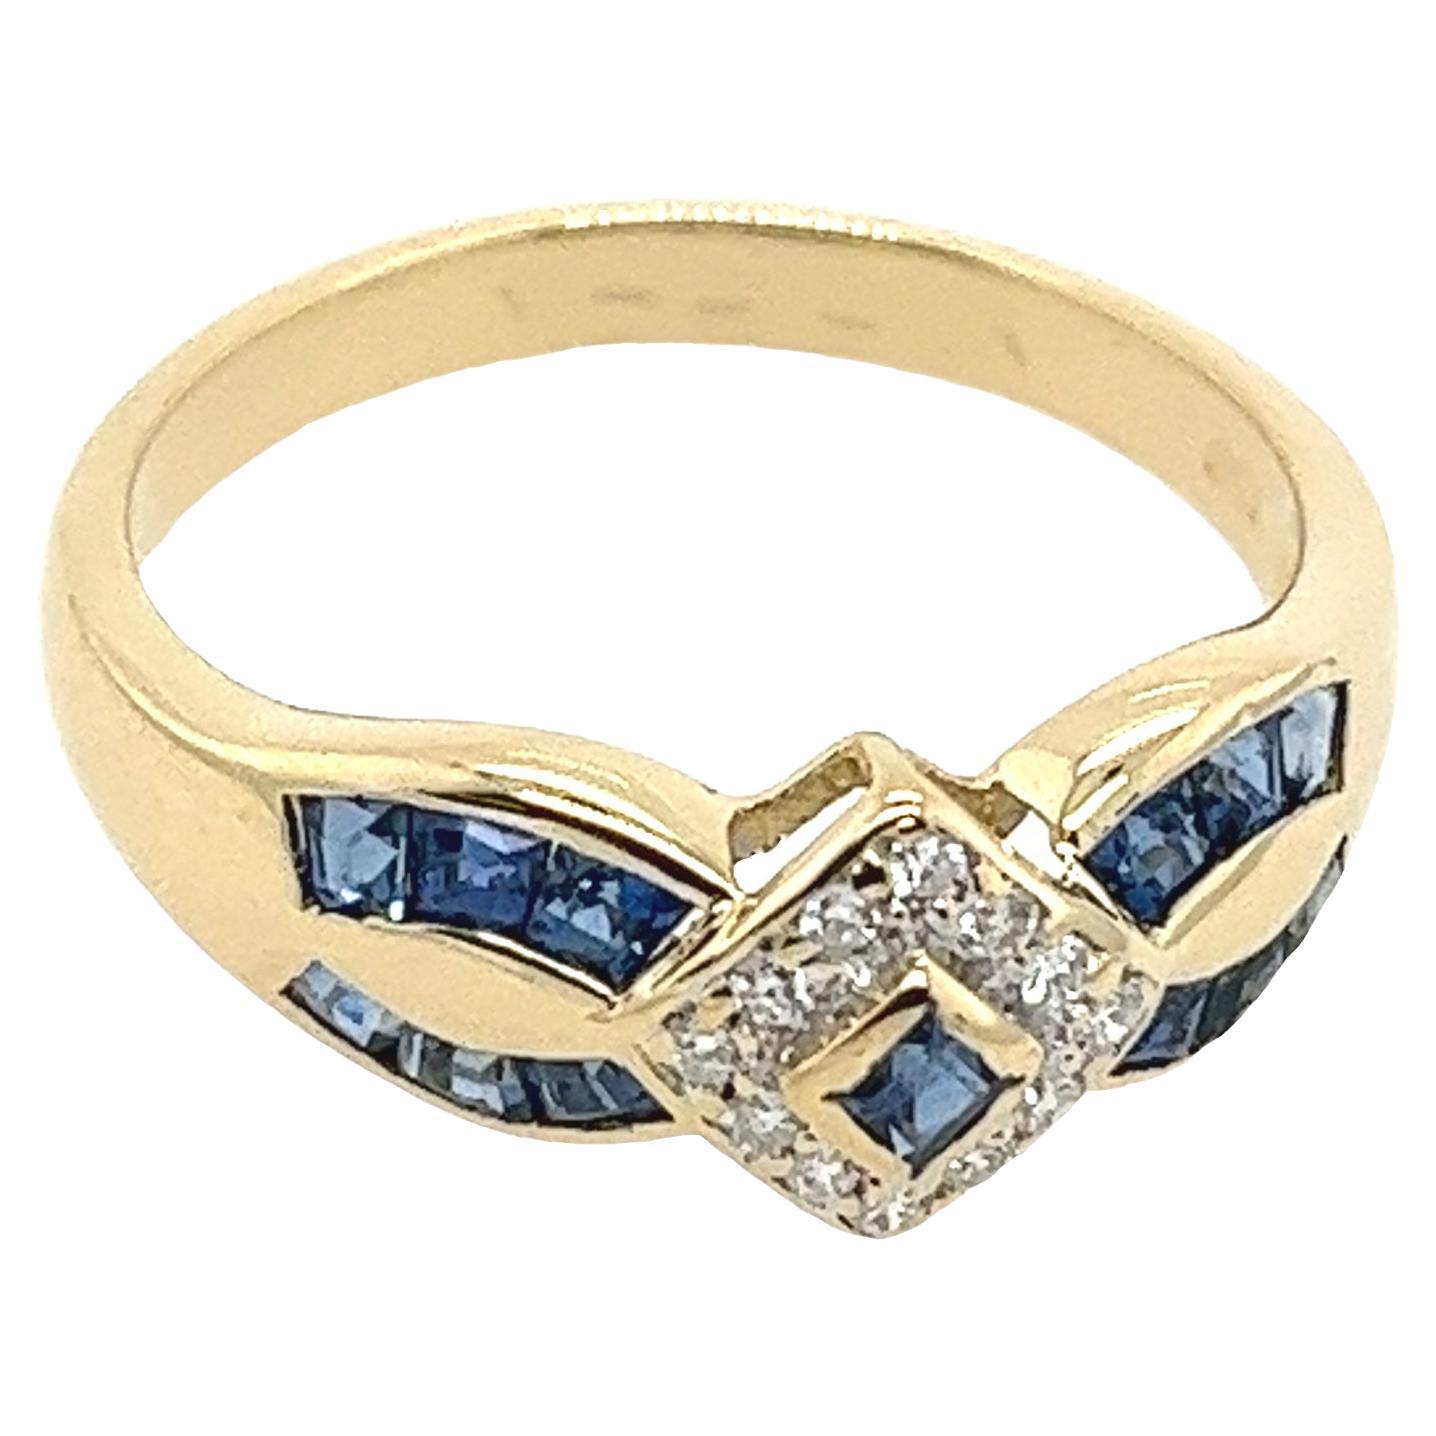 Vintage 18ct Yellow & White Gold Diamond Ring Set With 0.12ct Diamonds